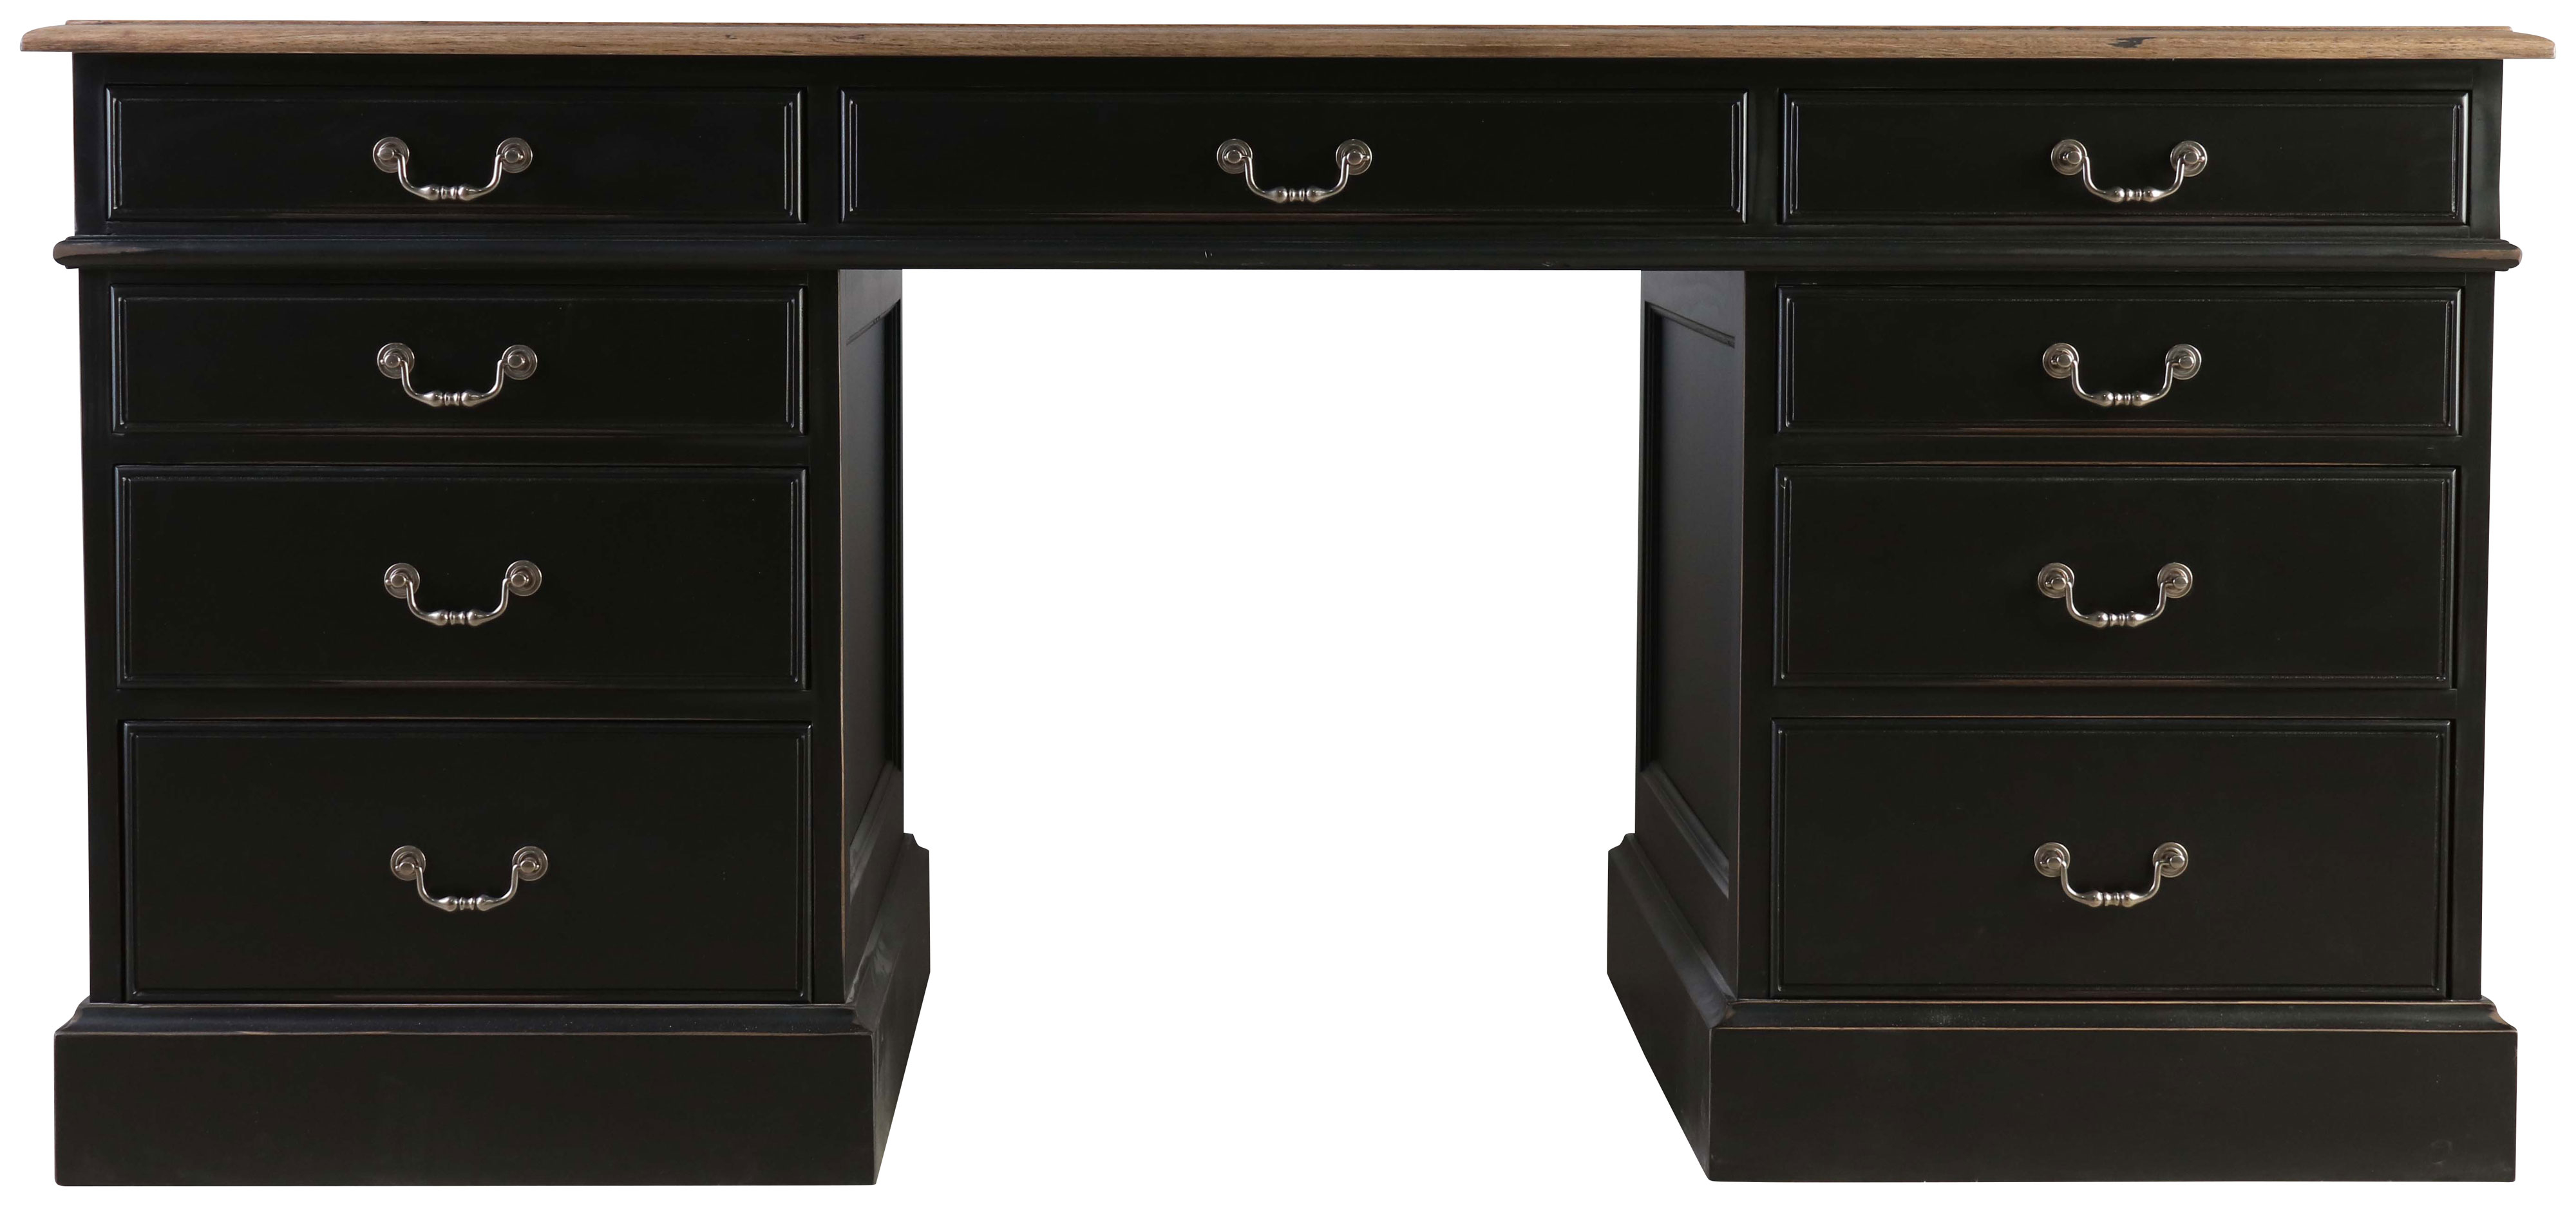 Block & Chisel antique weathered oak pedestal desk with matt black finish